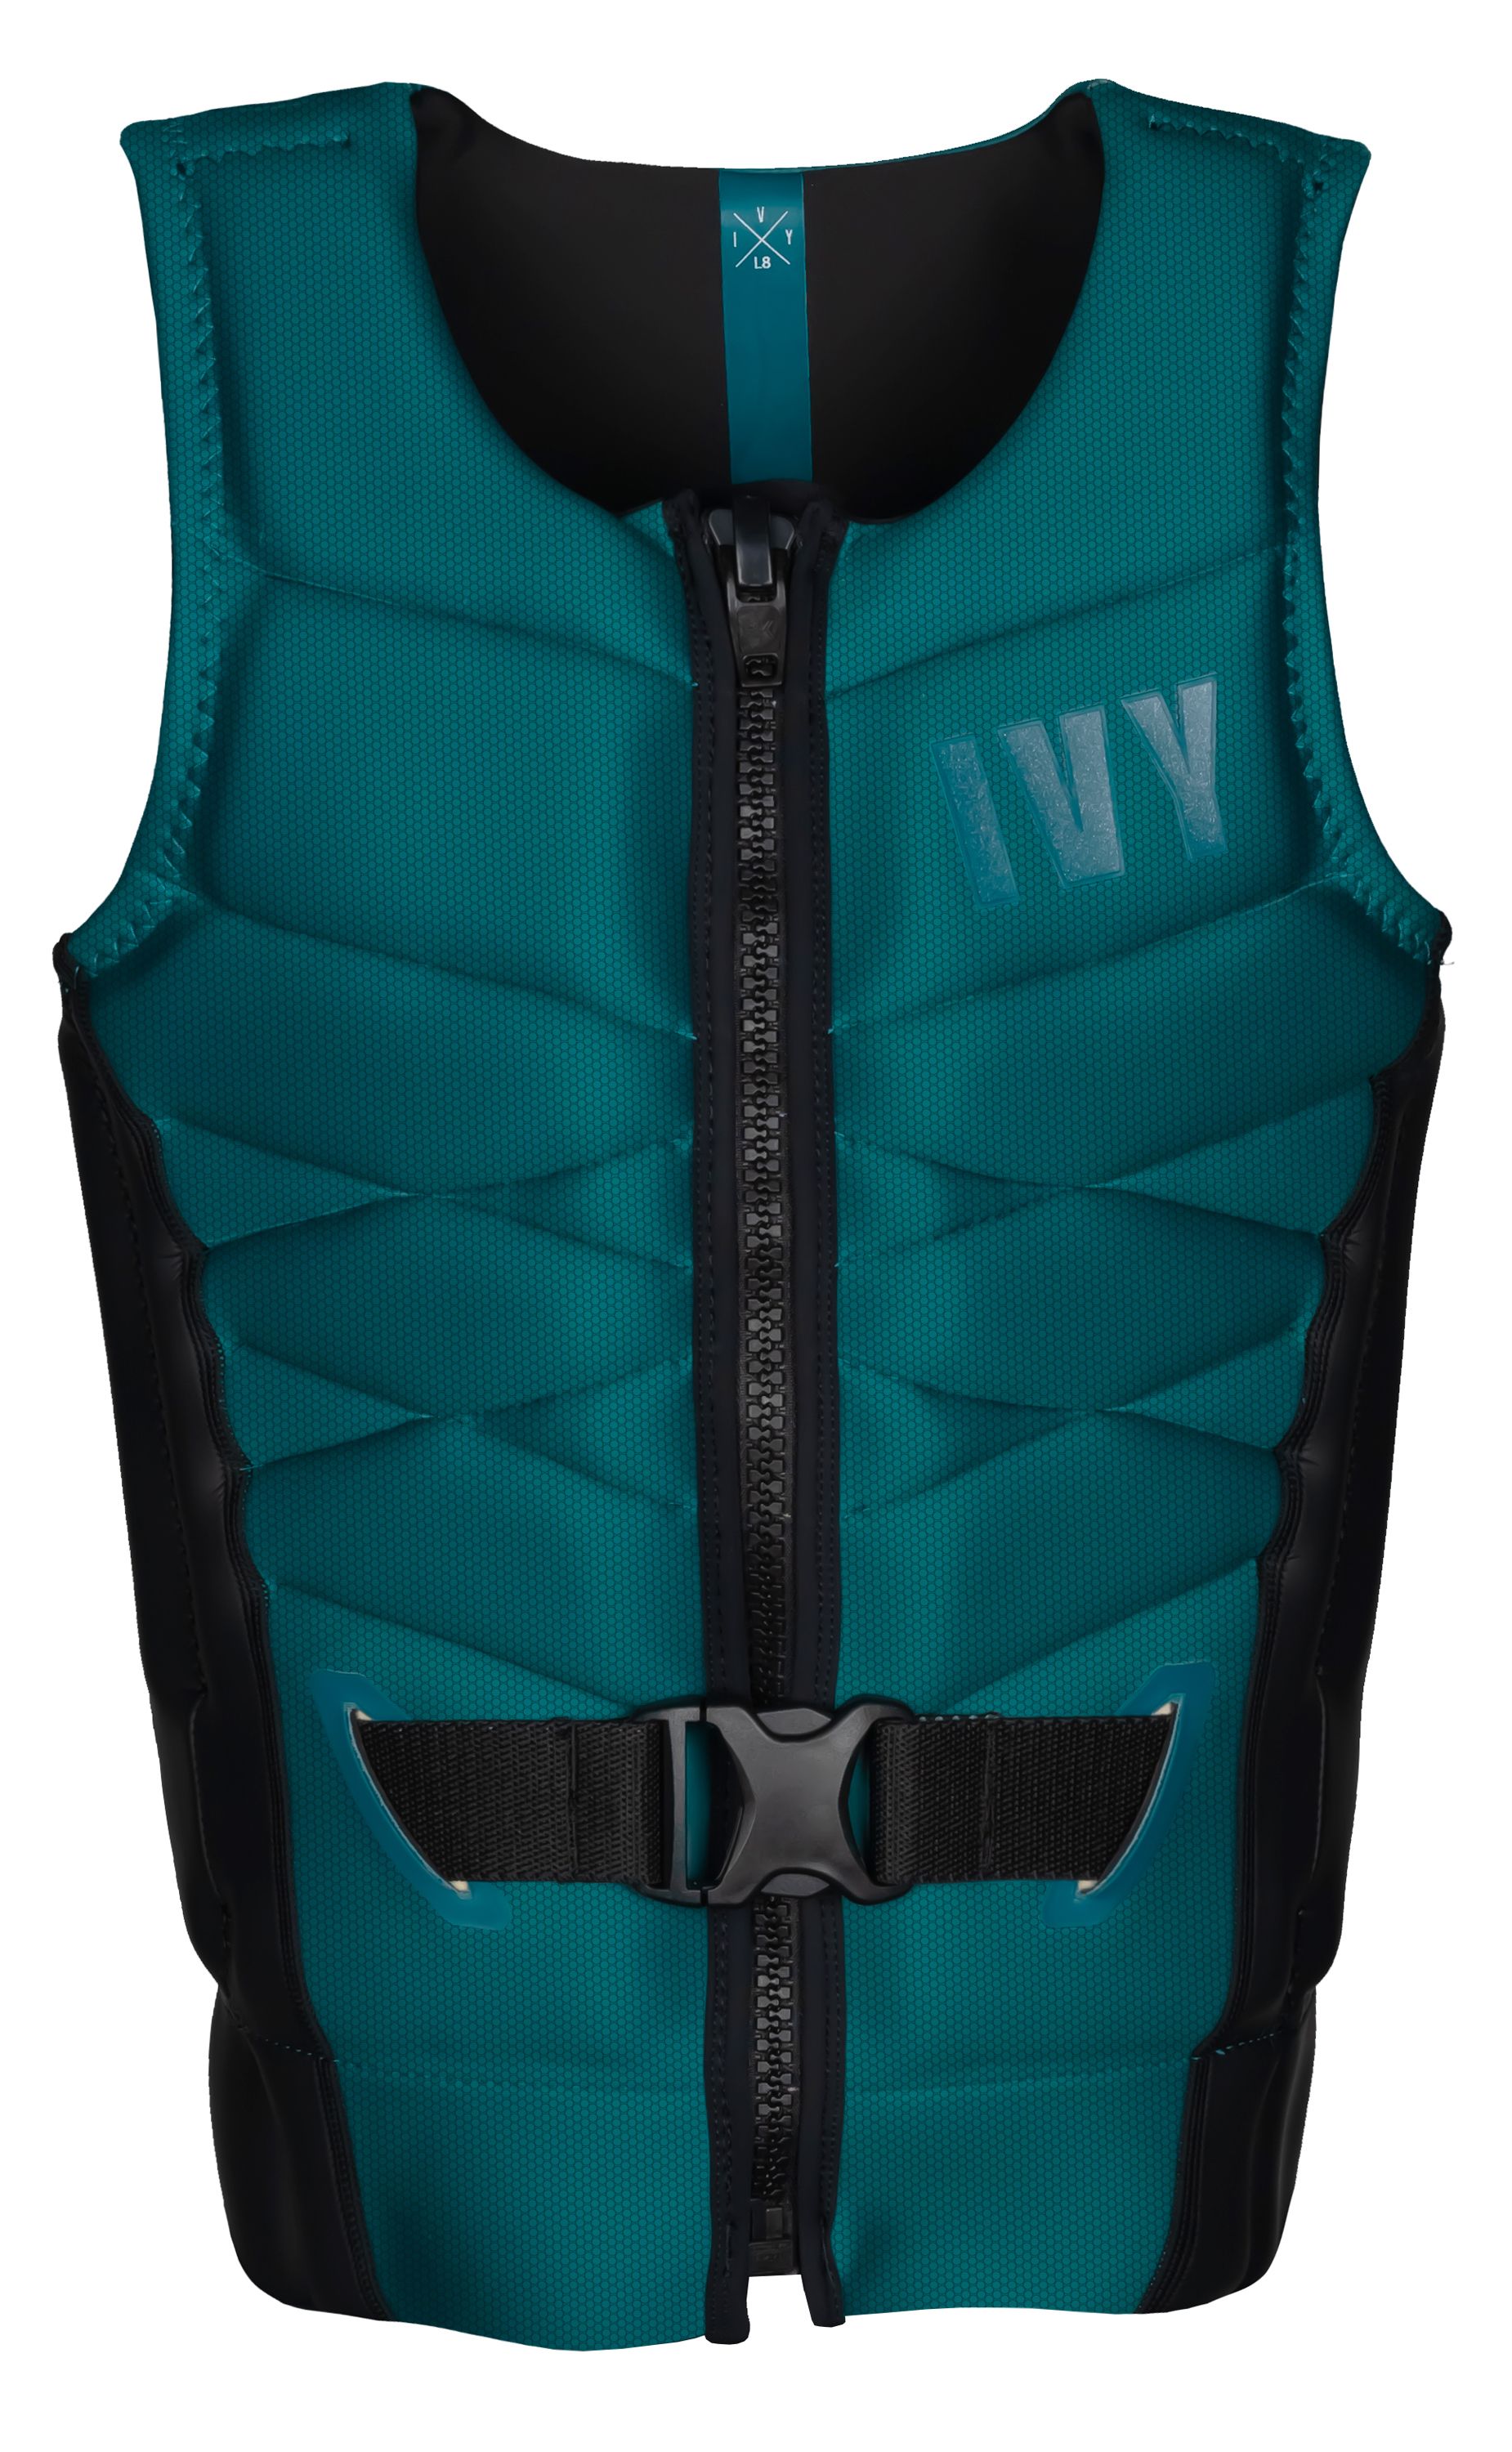 IVY Signature Vest - Teal Blue